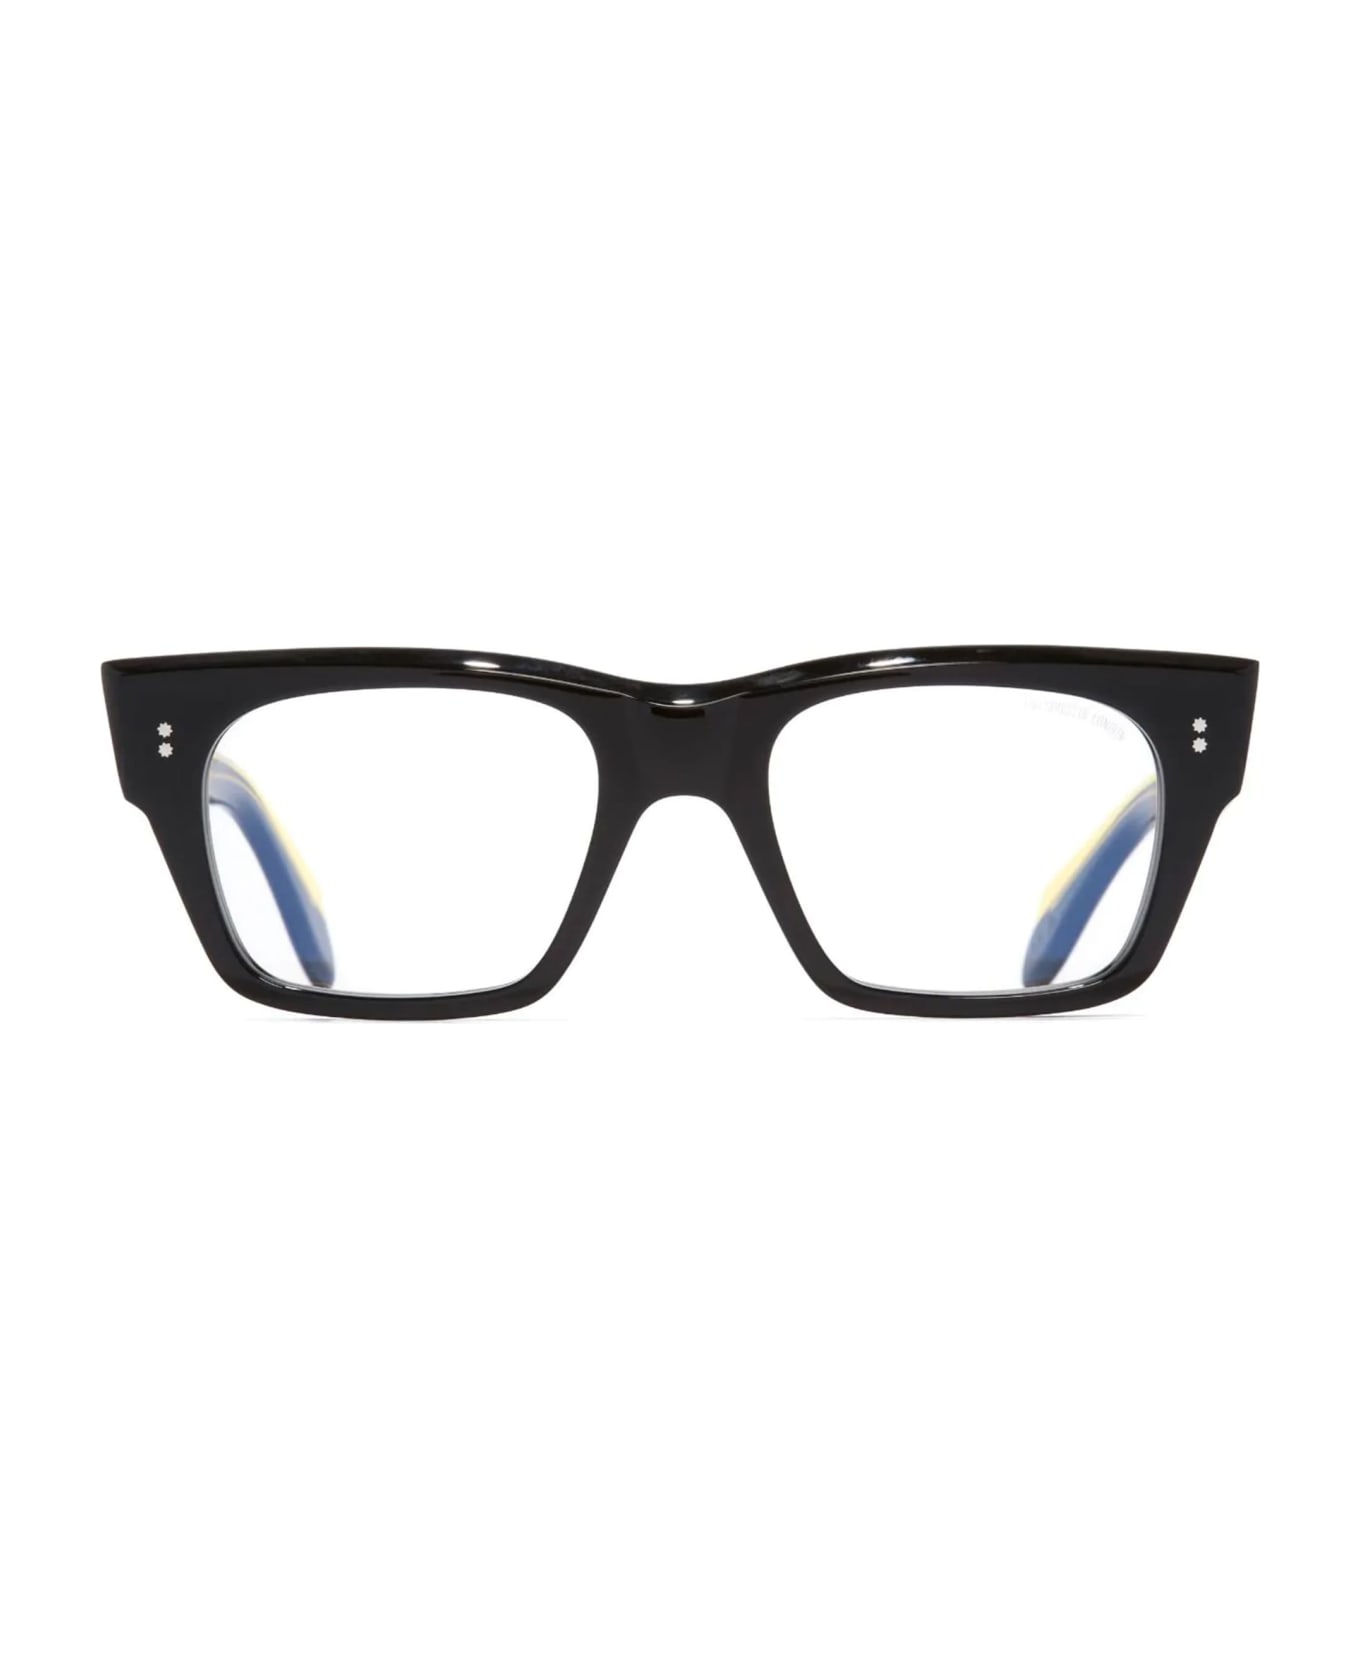 Cutler and Gross 9690 / Black Rx Glasses - Black